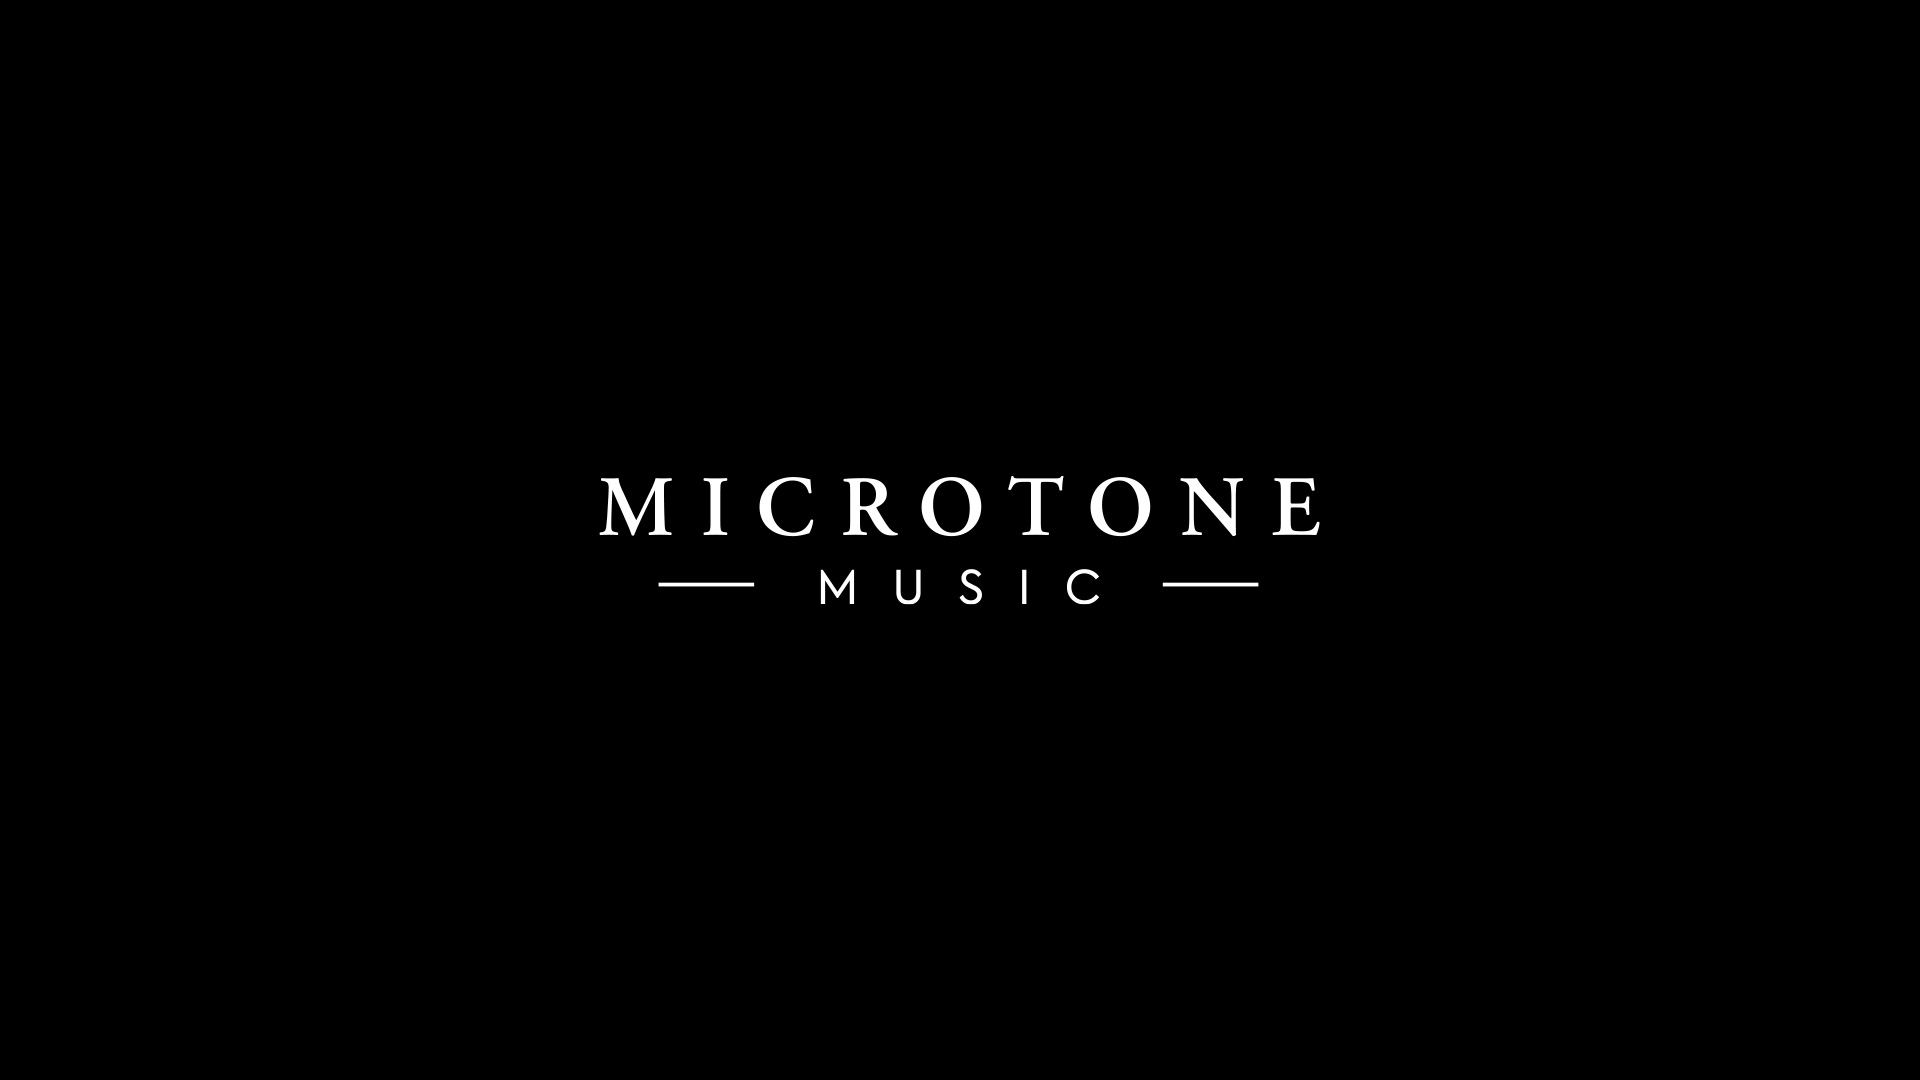 Microtone Music Video